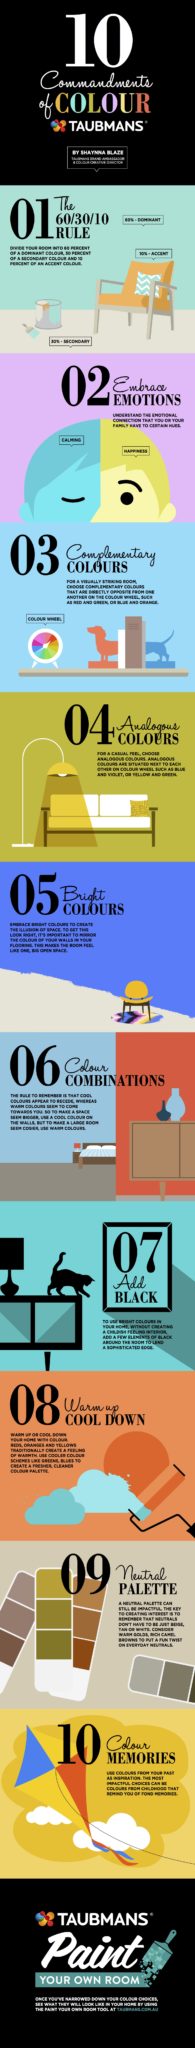 Taubmans 10 Commandments of Colour Infographic